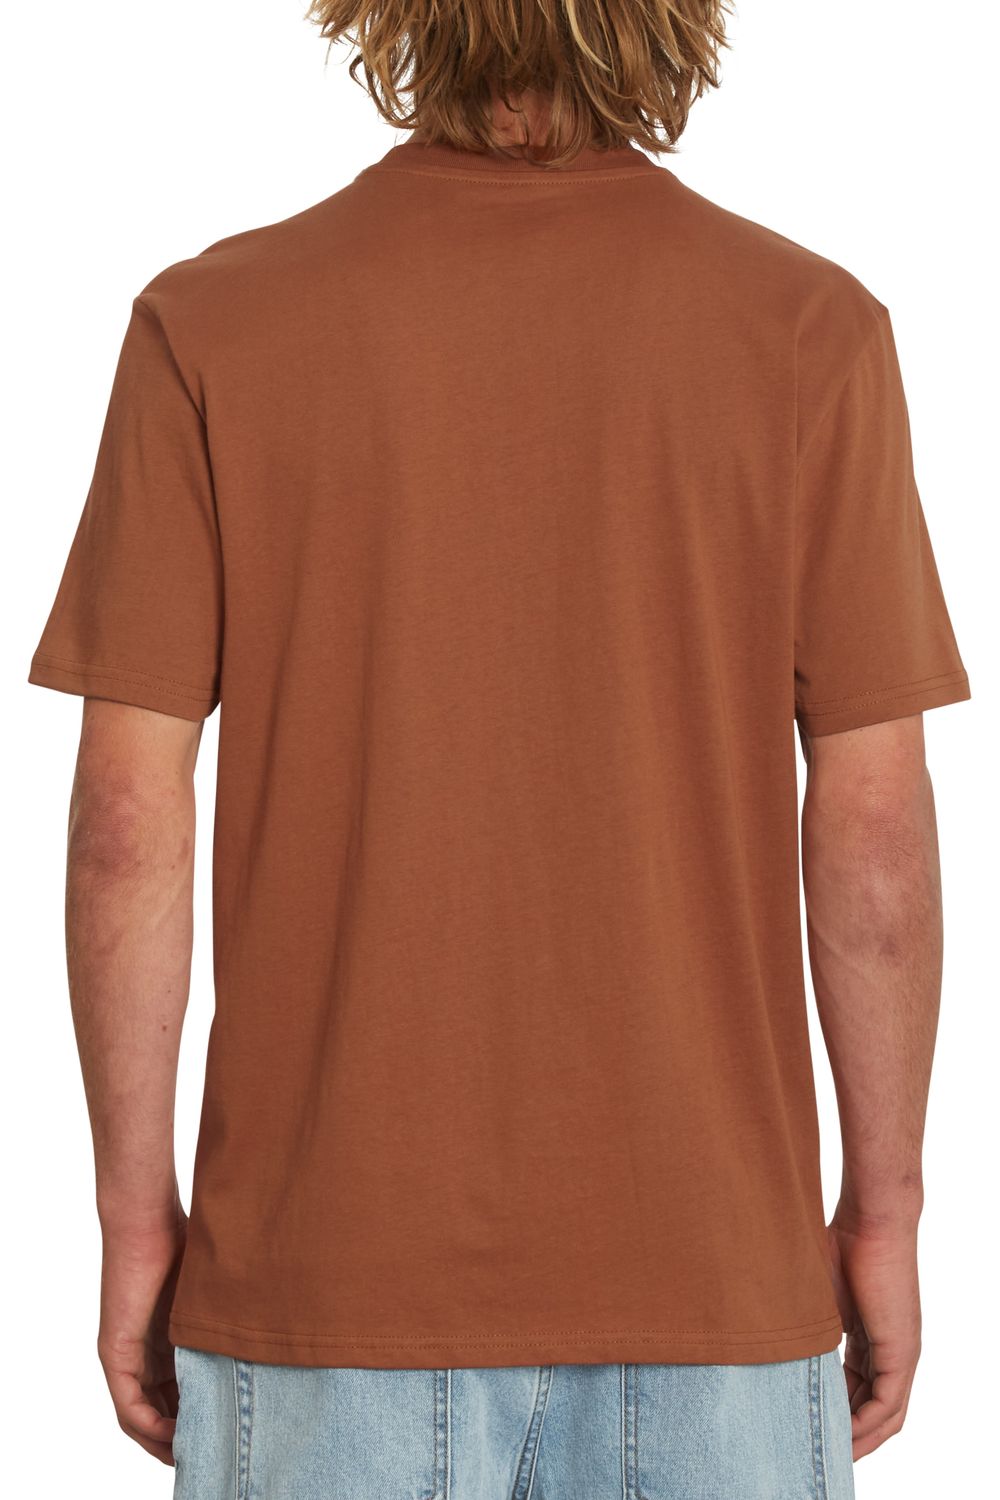 Volcom Stone Blanks Bsc Short Sleeve T-Shirt Mocha